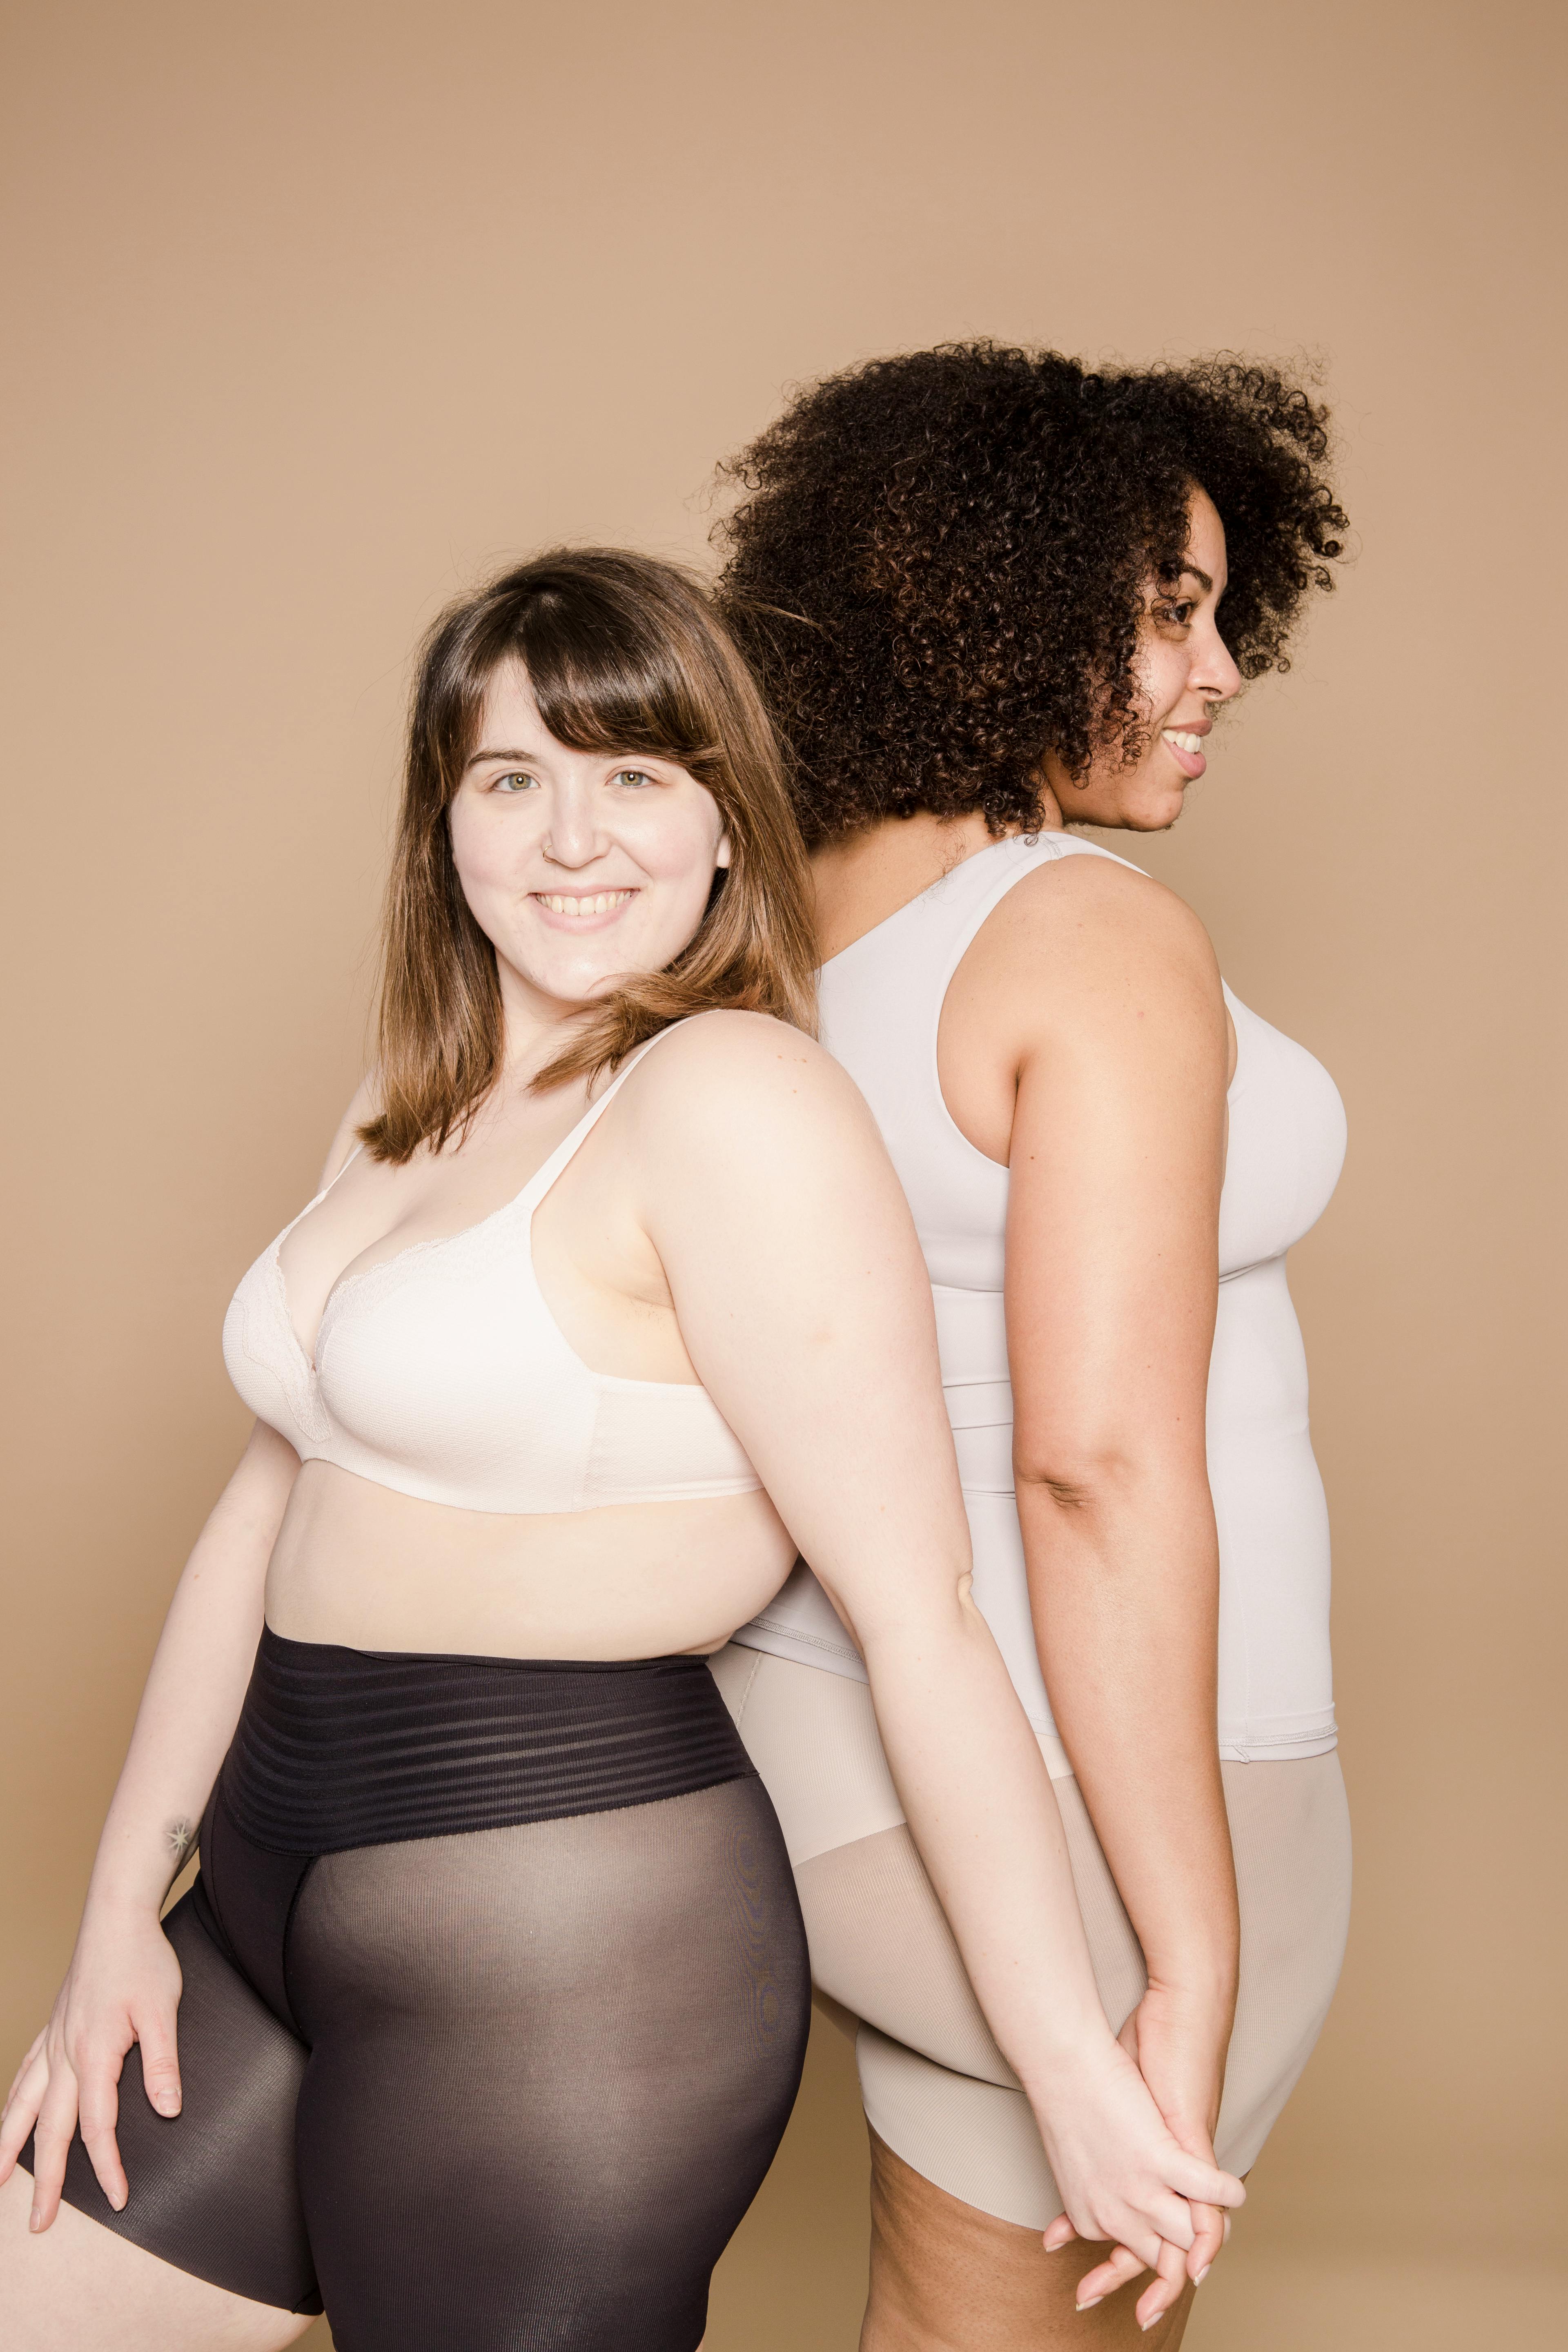 Happy diverse overweight women in underwear in studio · Free Stock Photo